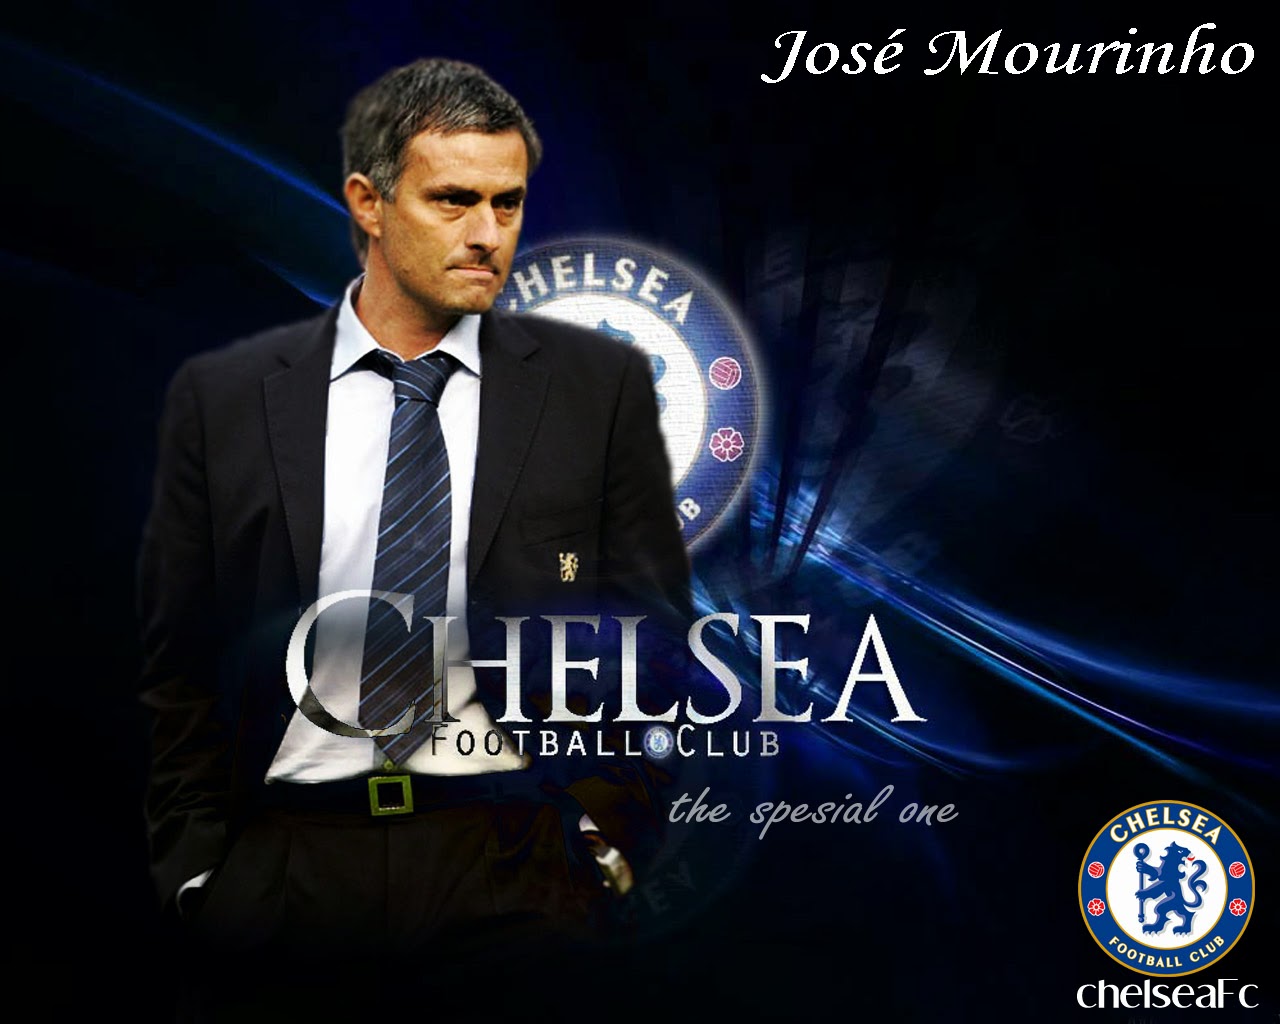 mourinho wallpaper,suit,font,spokesperson,official,advertising